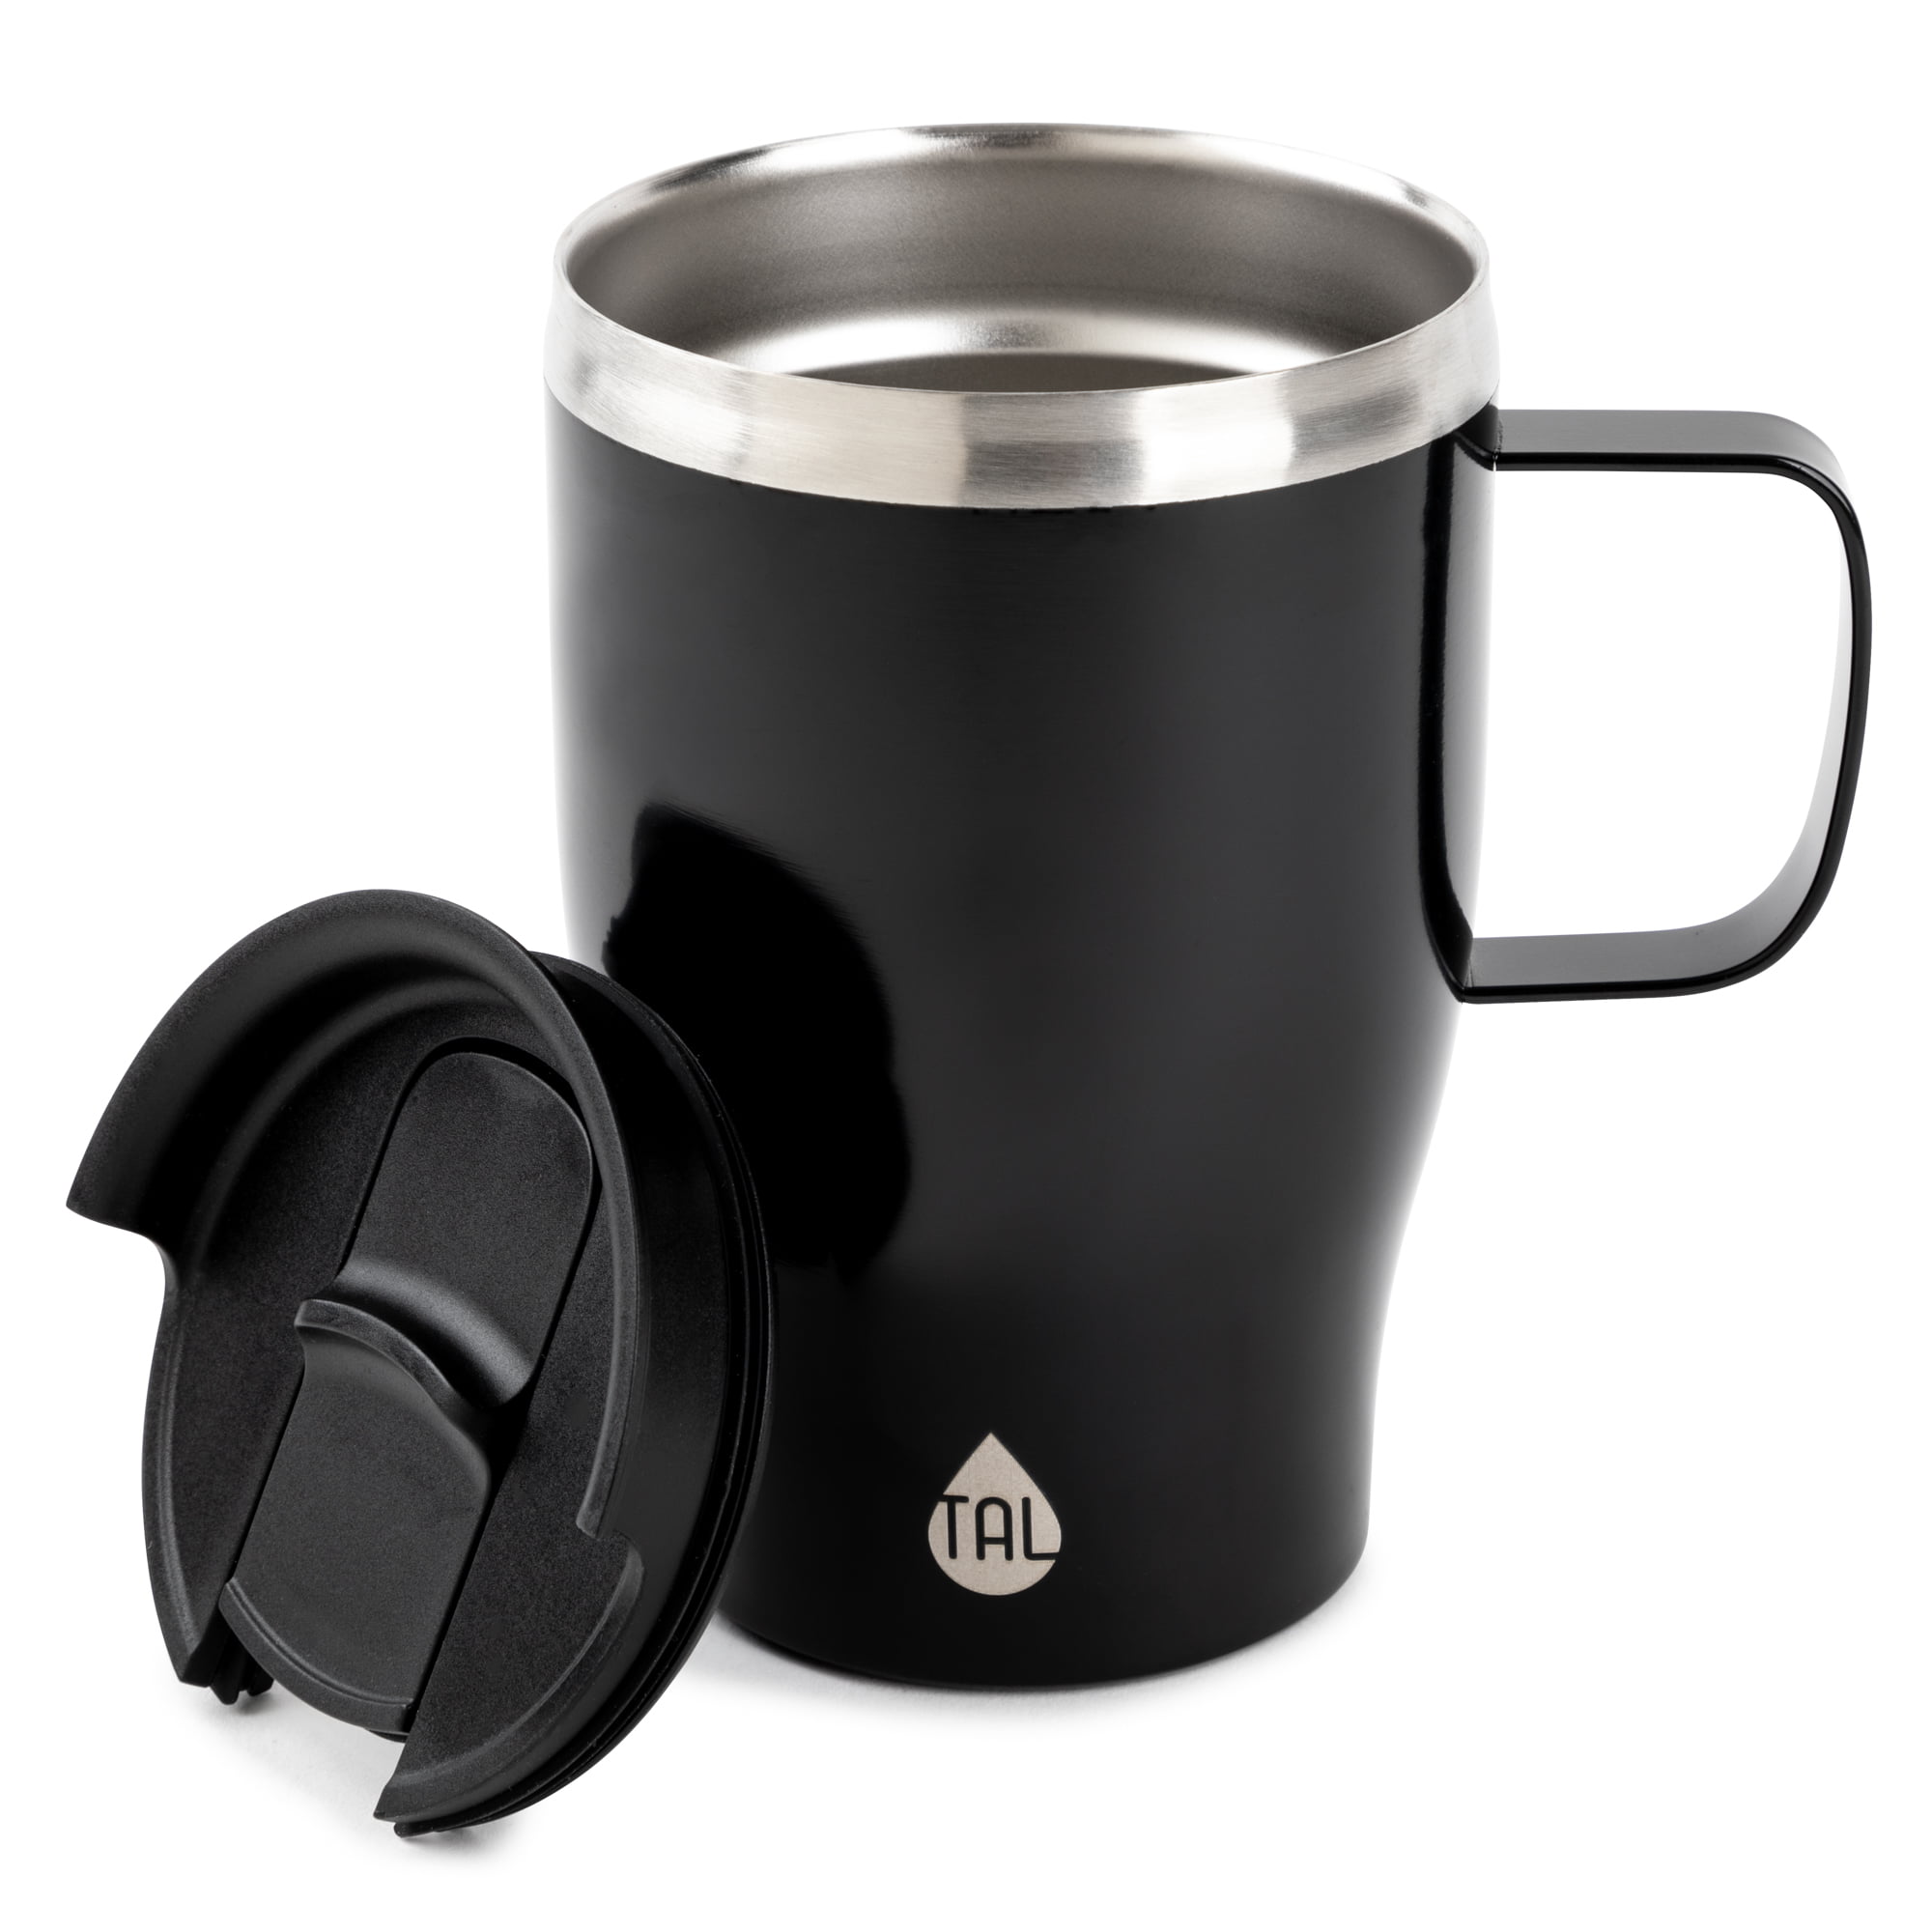 Tal Stainless Steel Brew Coffee Mug 15 fl oz, Sage